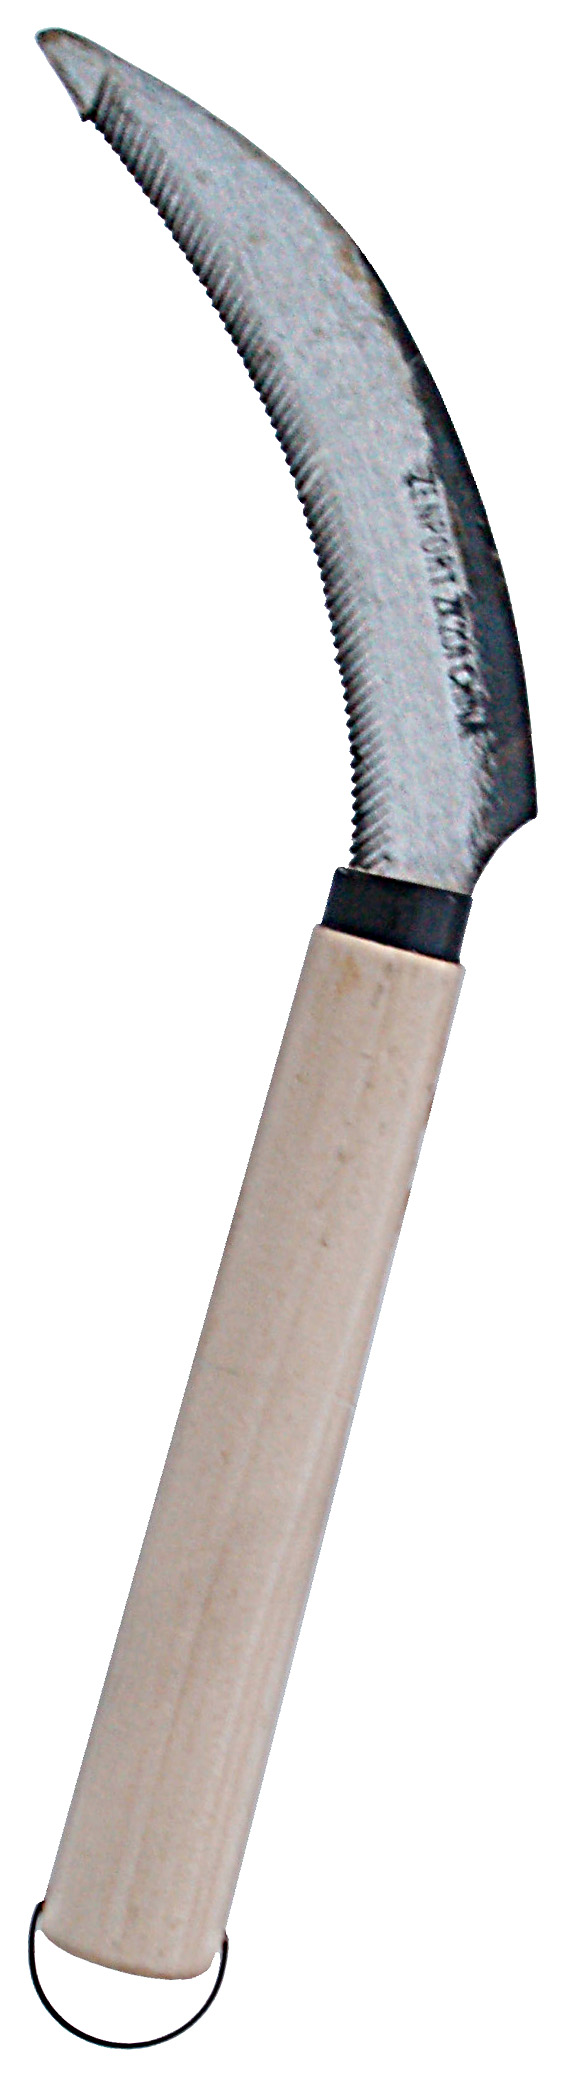 Zenport Sickle K201 Harvest Sickle/Berry Knife, 4.5-Inch Carbon Steel Curved Serrated Blade